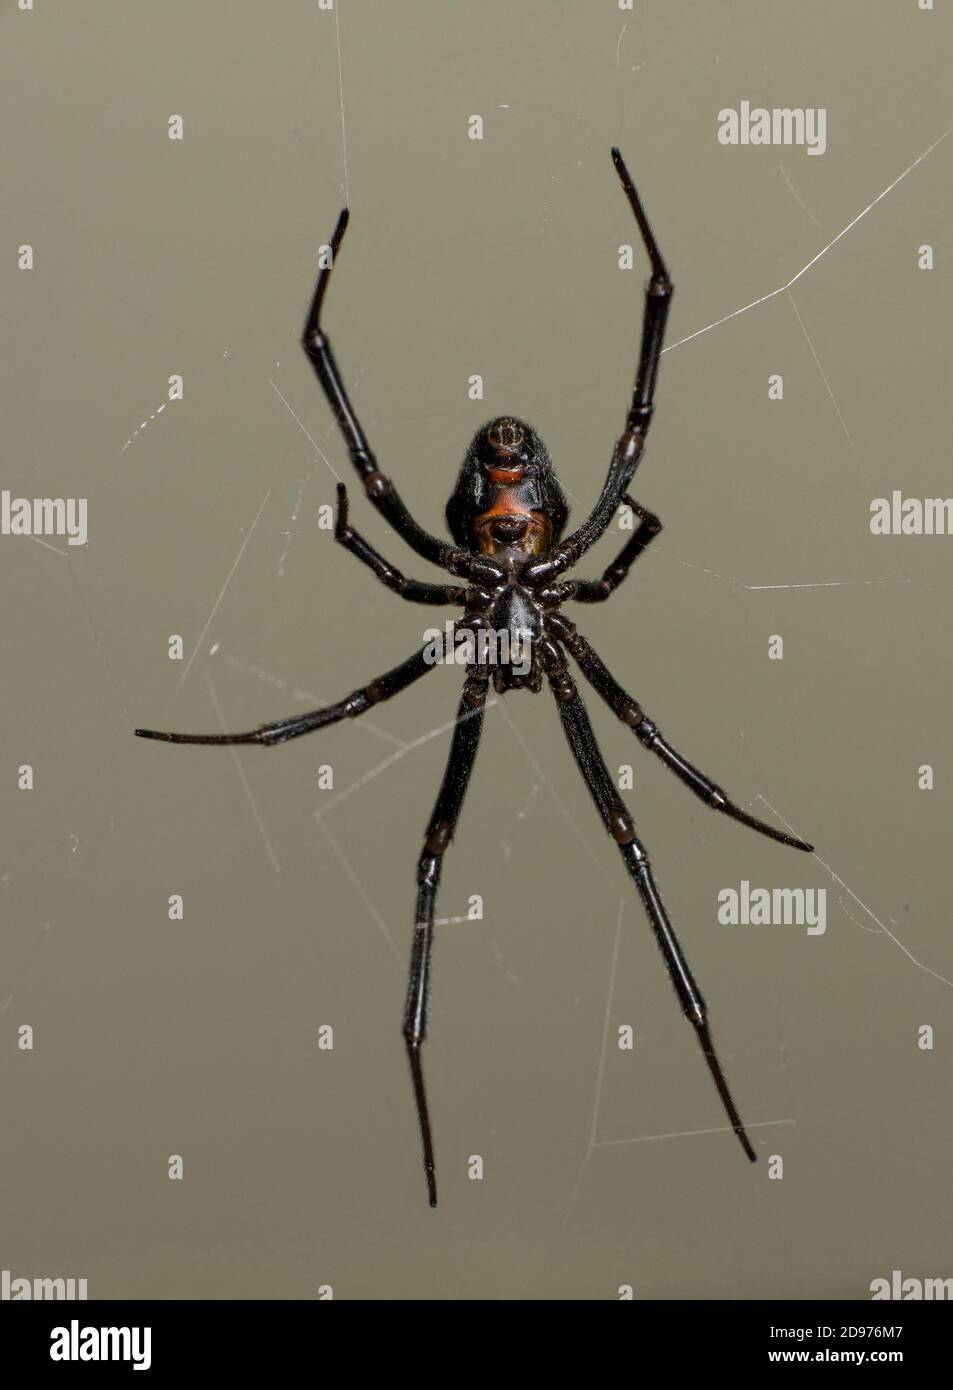 Black Wido Spider (Latrodectus sp.), Southeastern Arizona. Stock Photo